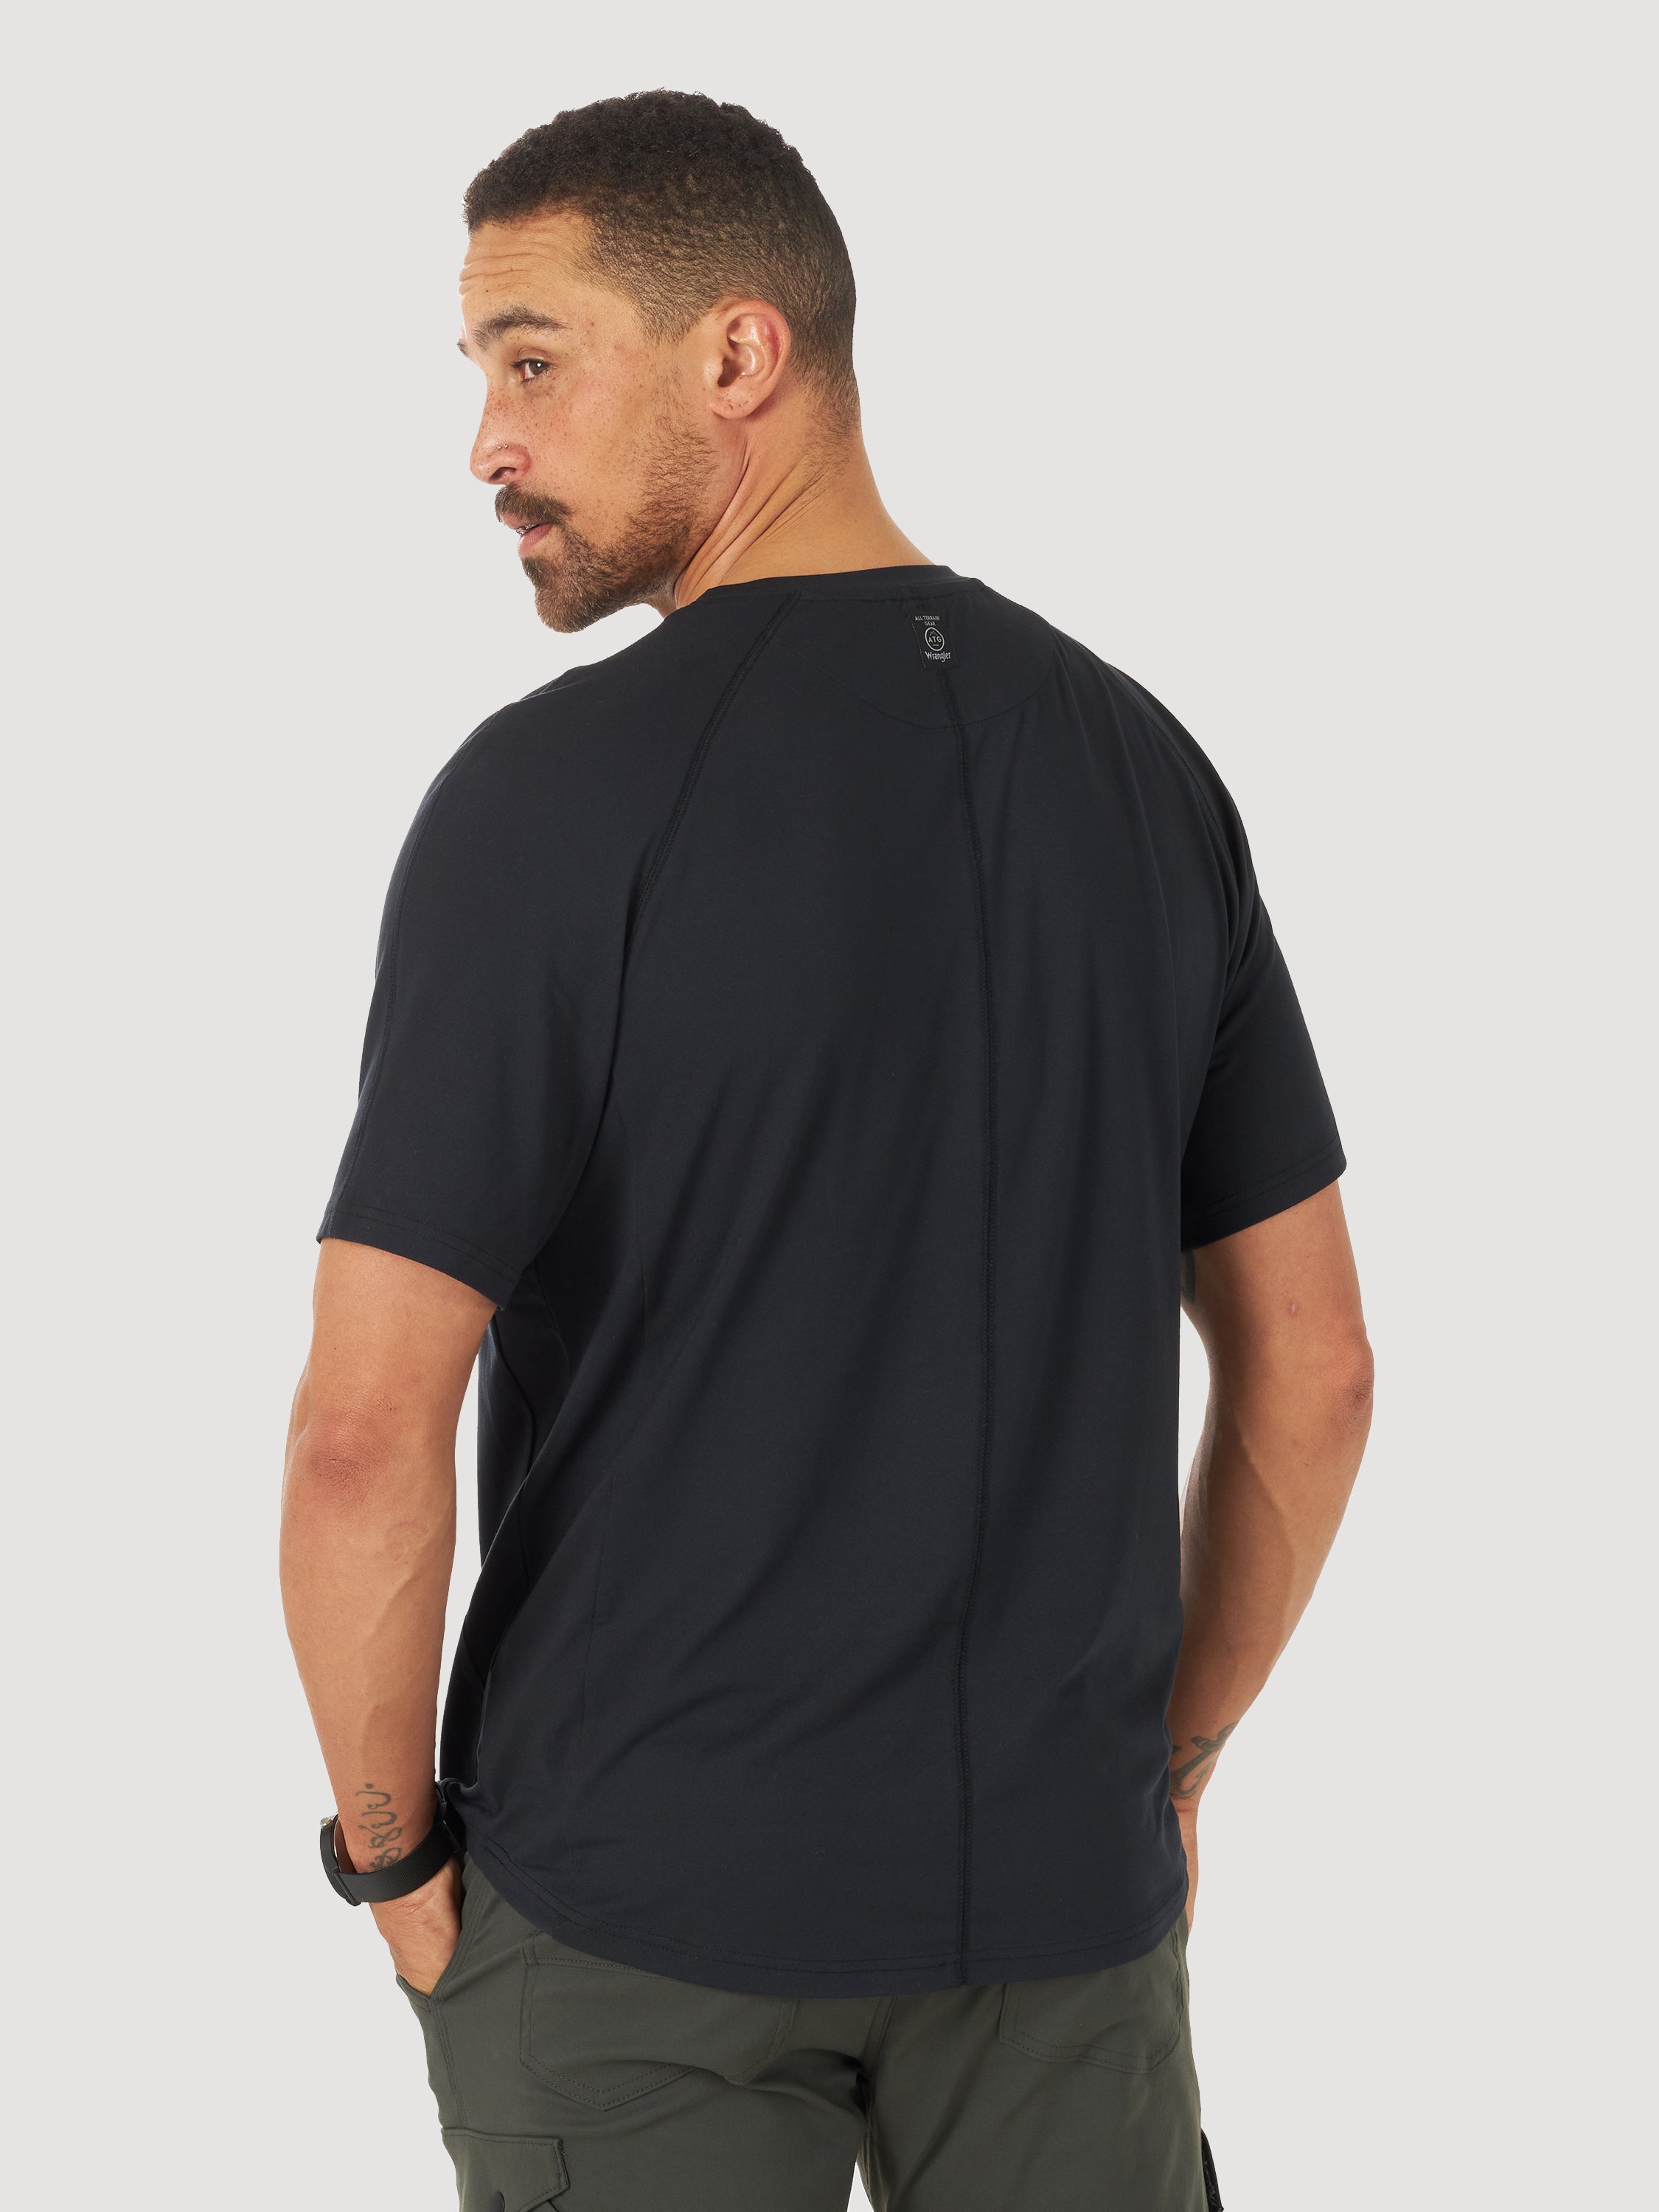 All Terrain Gear Kurzarm Performance Tee in Black T-Shirts Wrangler   